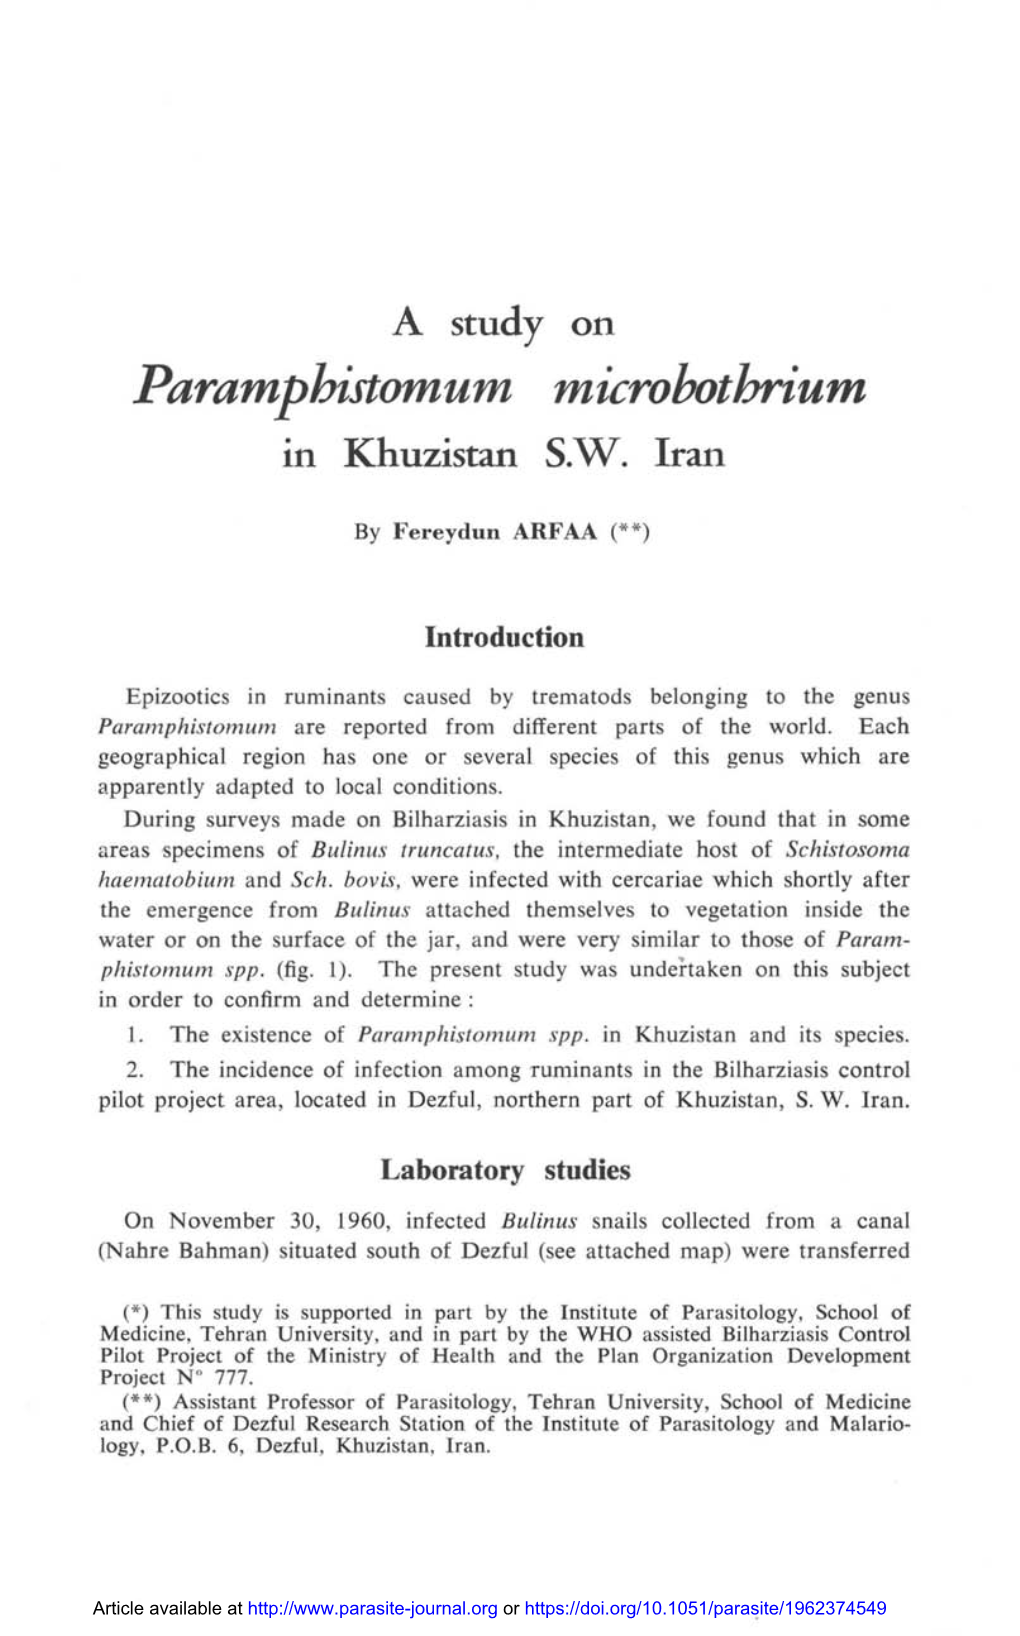 A Study of Paramphistomum Microbothrium in Khuzistan S.-W. Iran